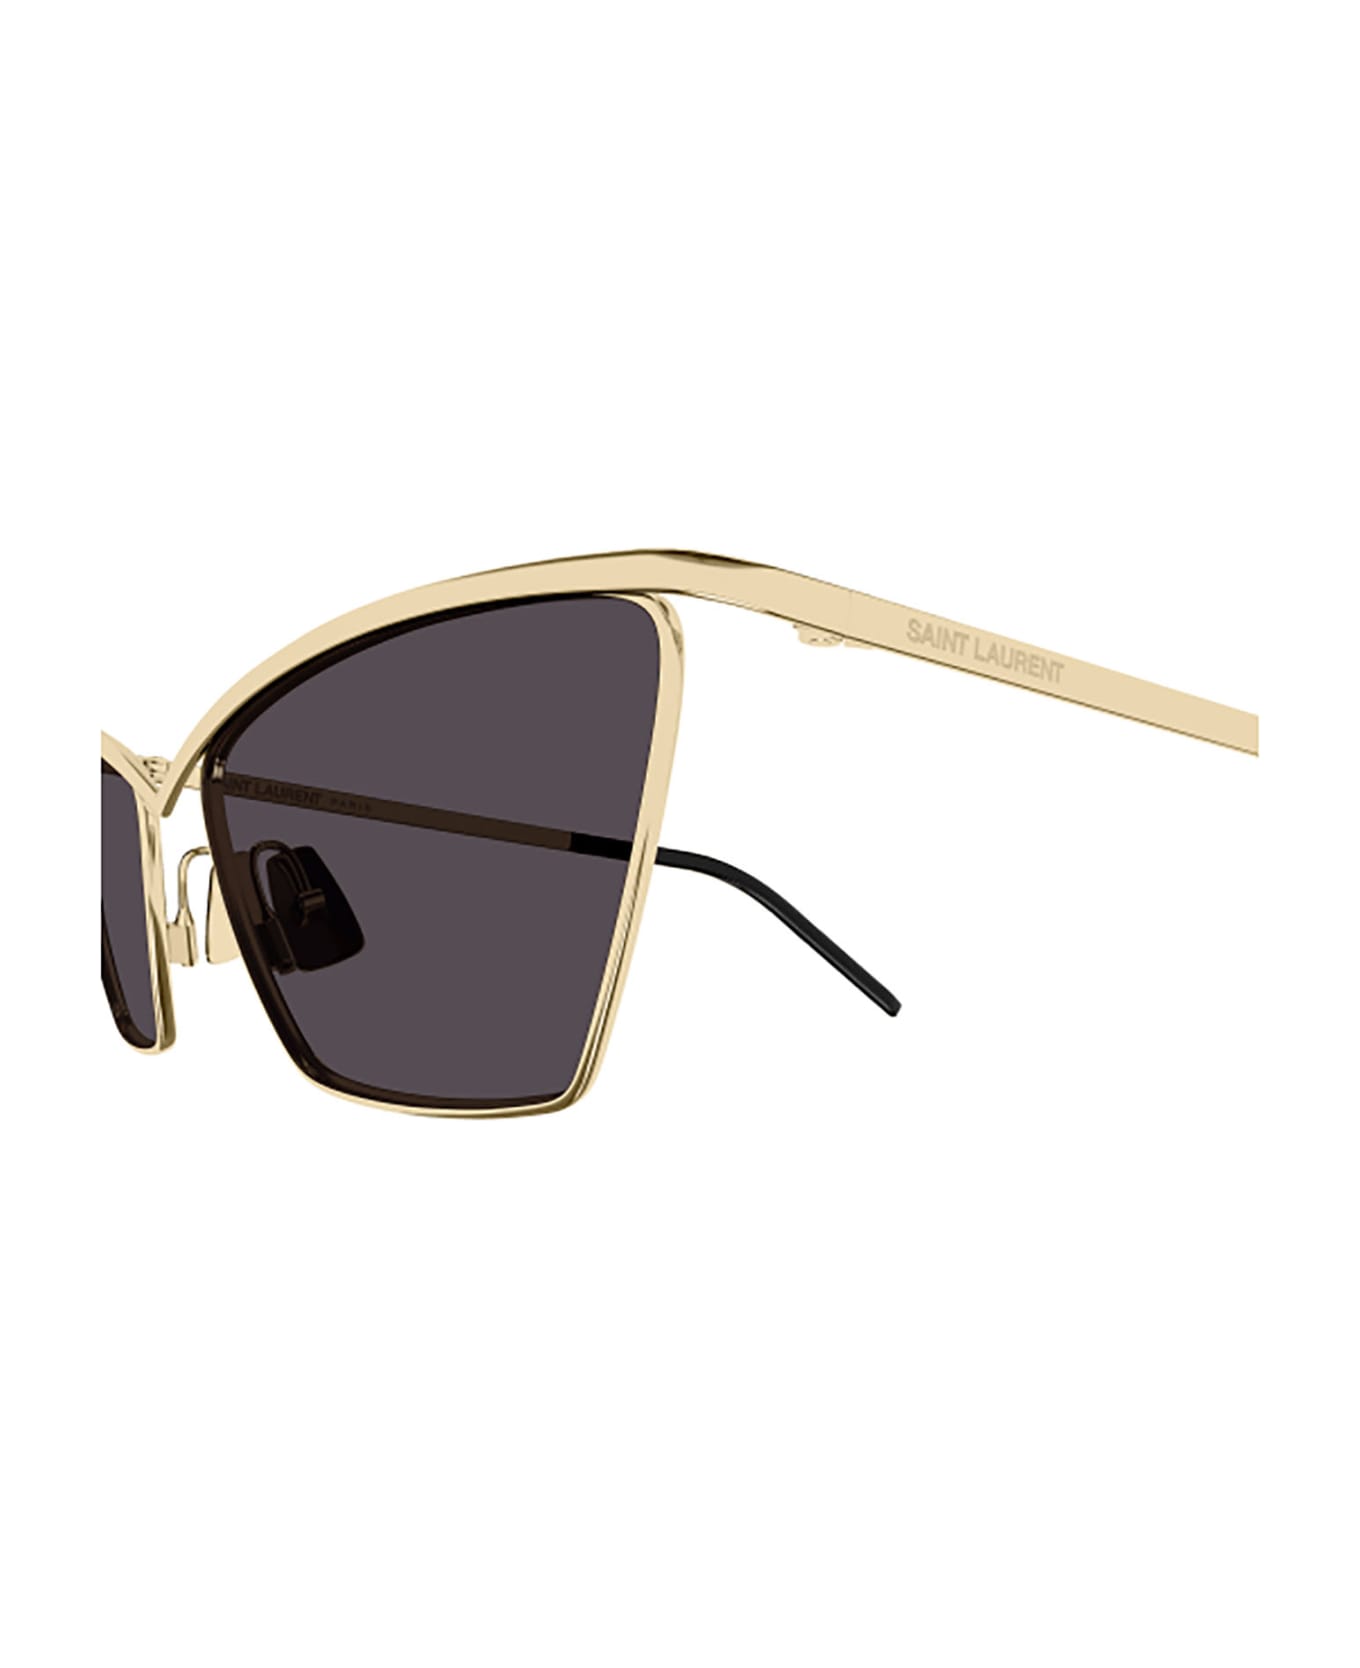 Saint Laurent Eyewear Sl 637 Sunglasses - 003 gold gold black